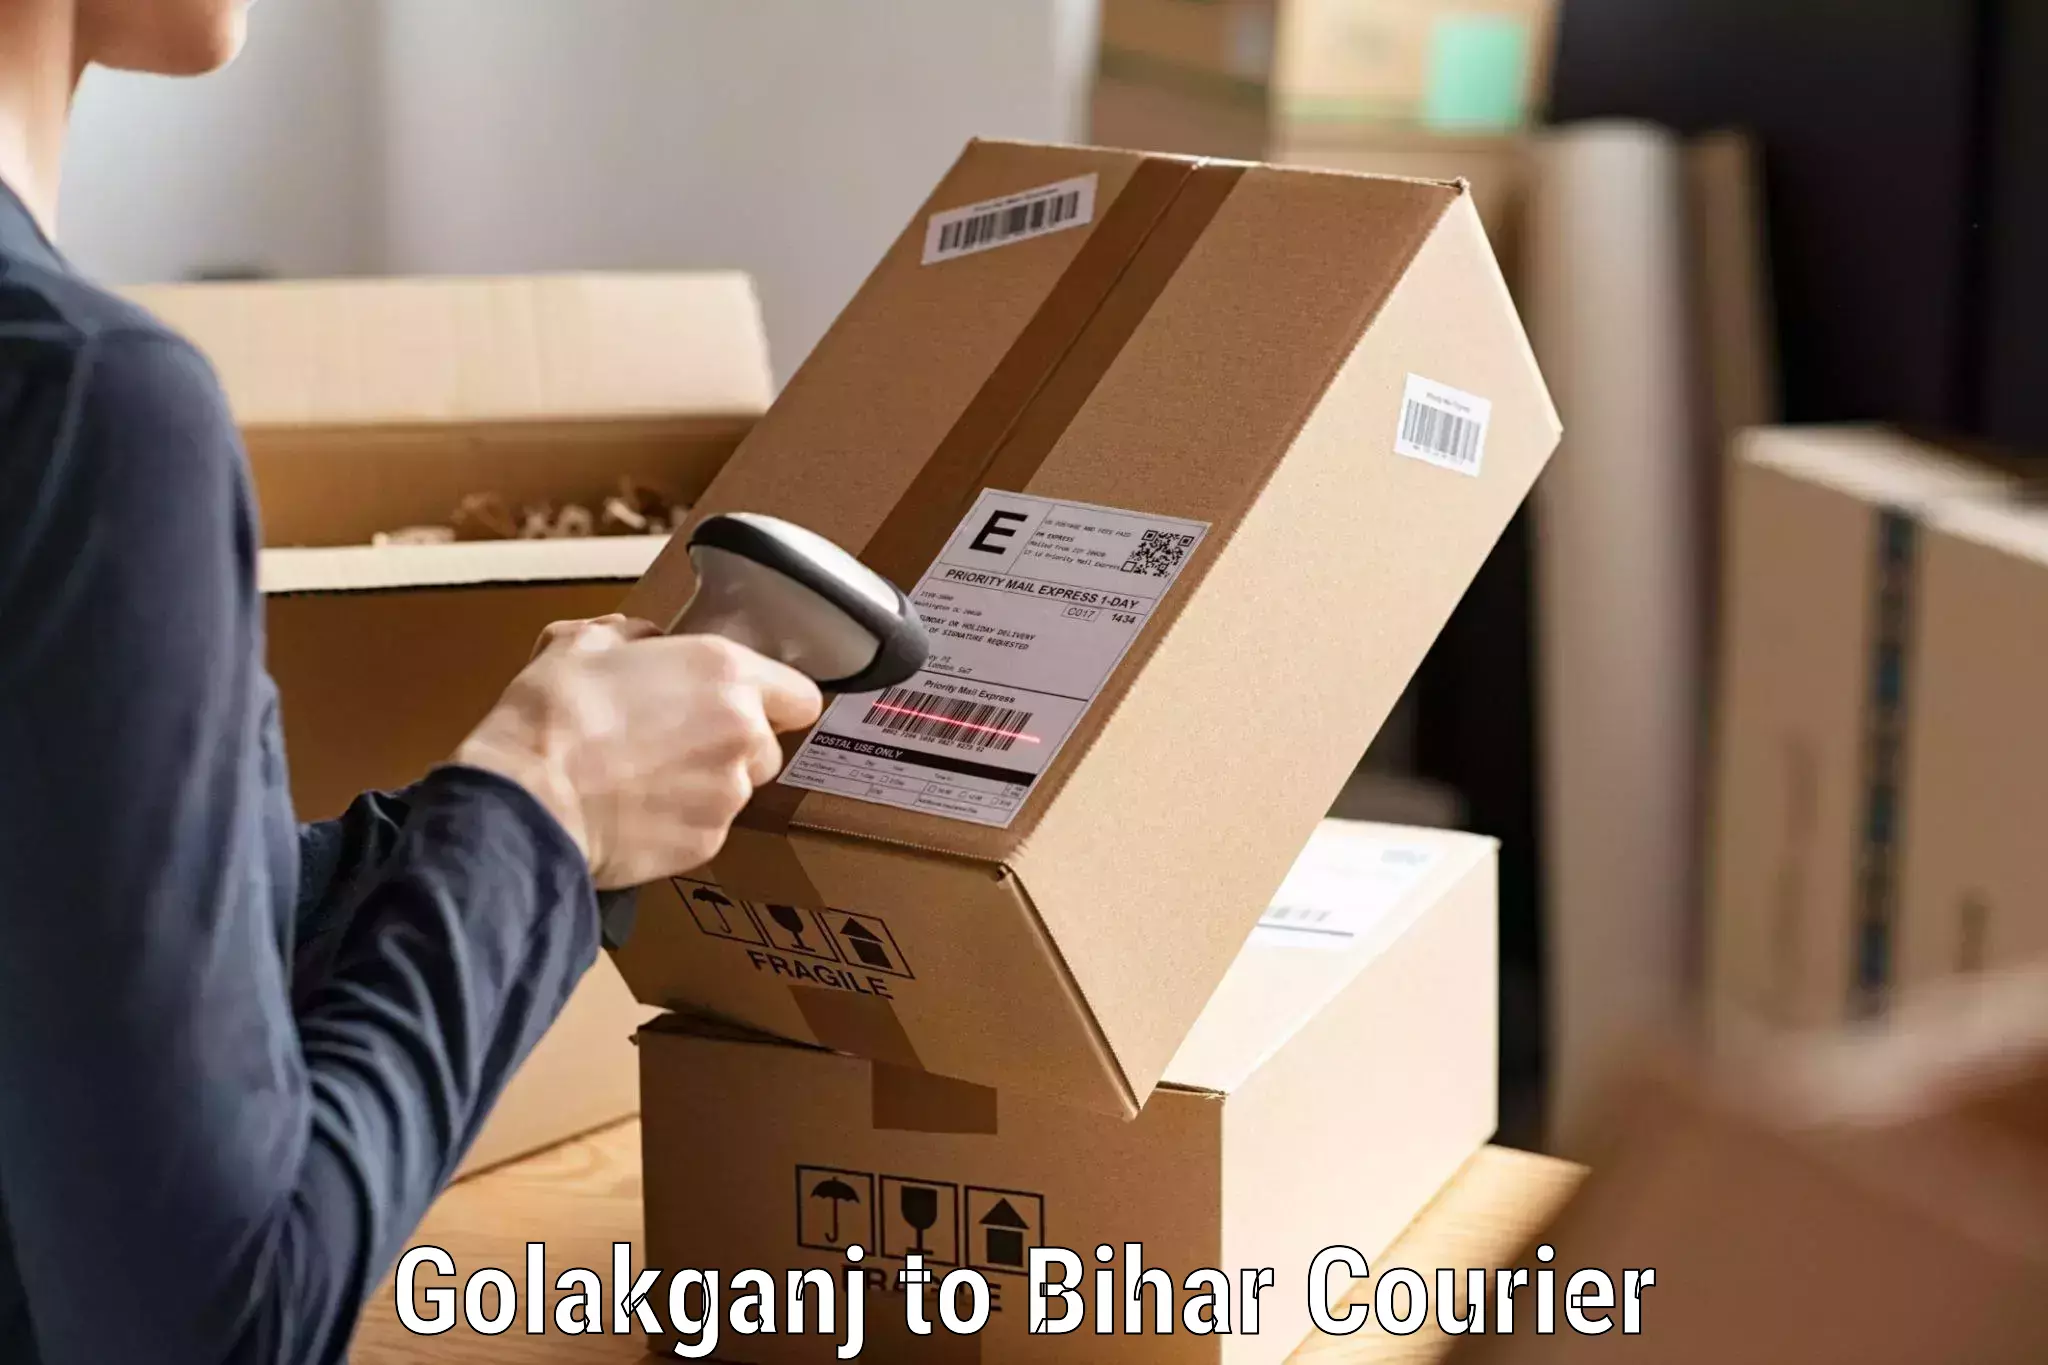 On-demand delivery Golakganj to Dhaka